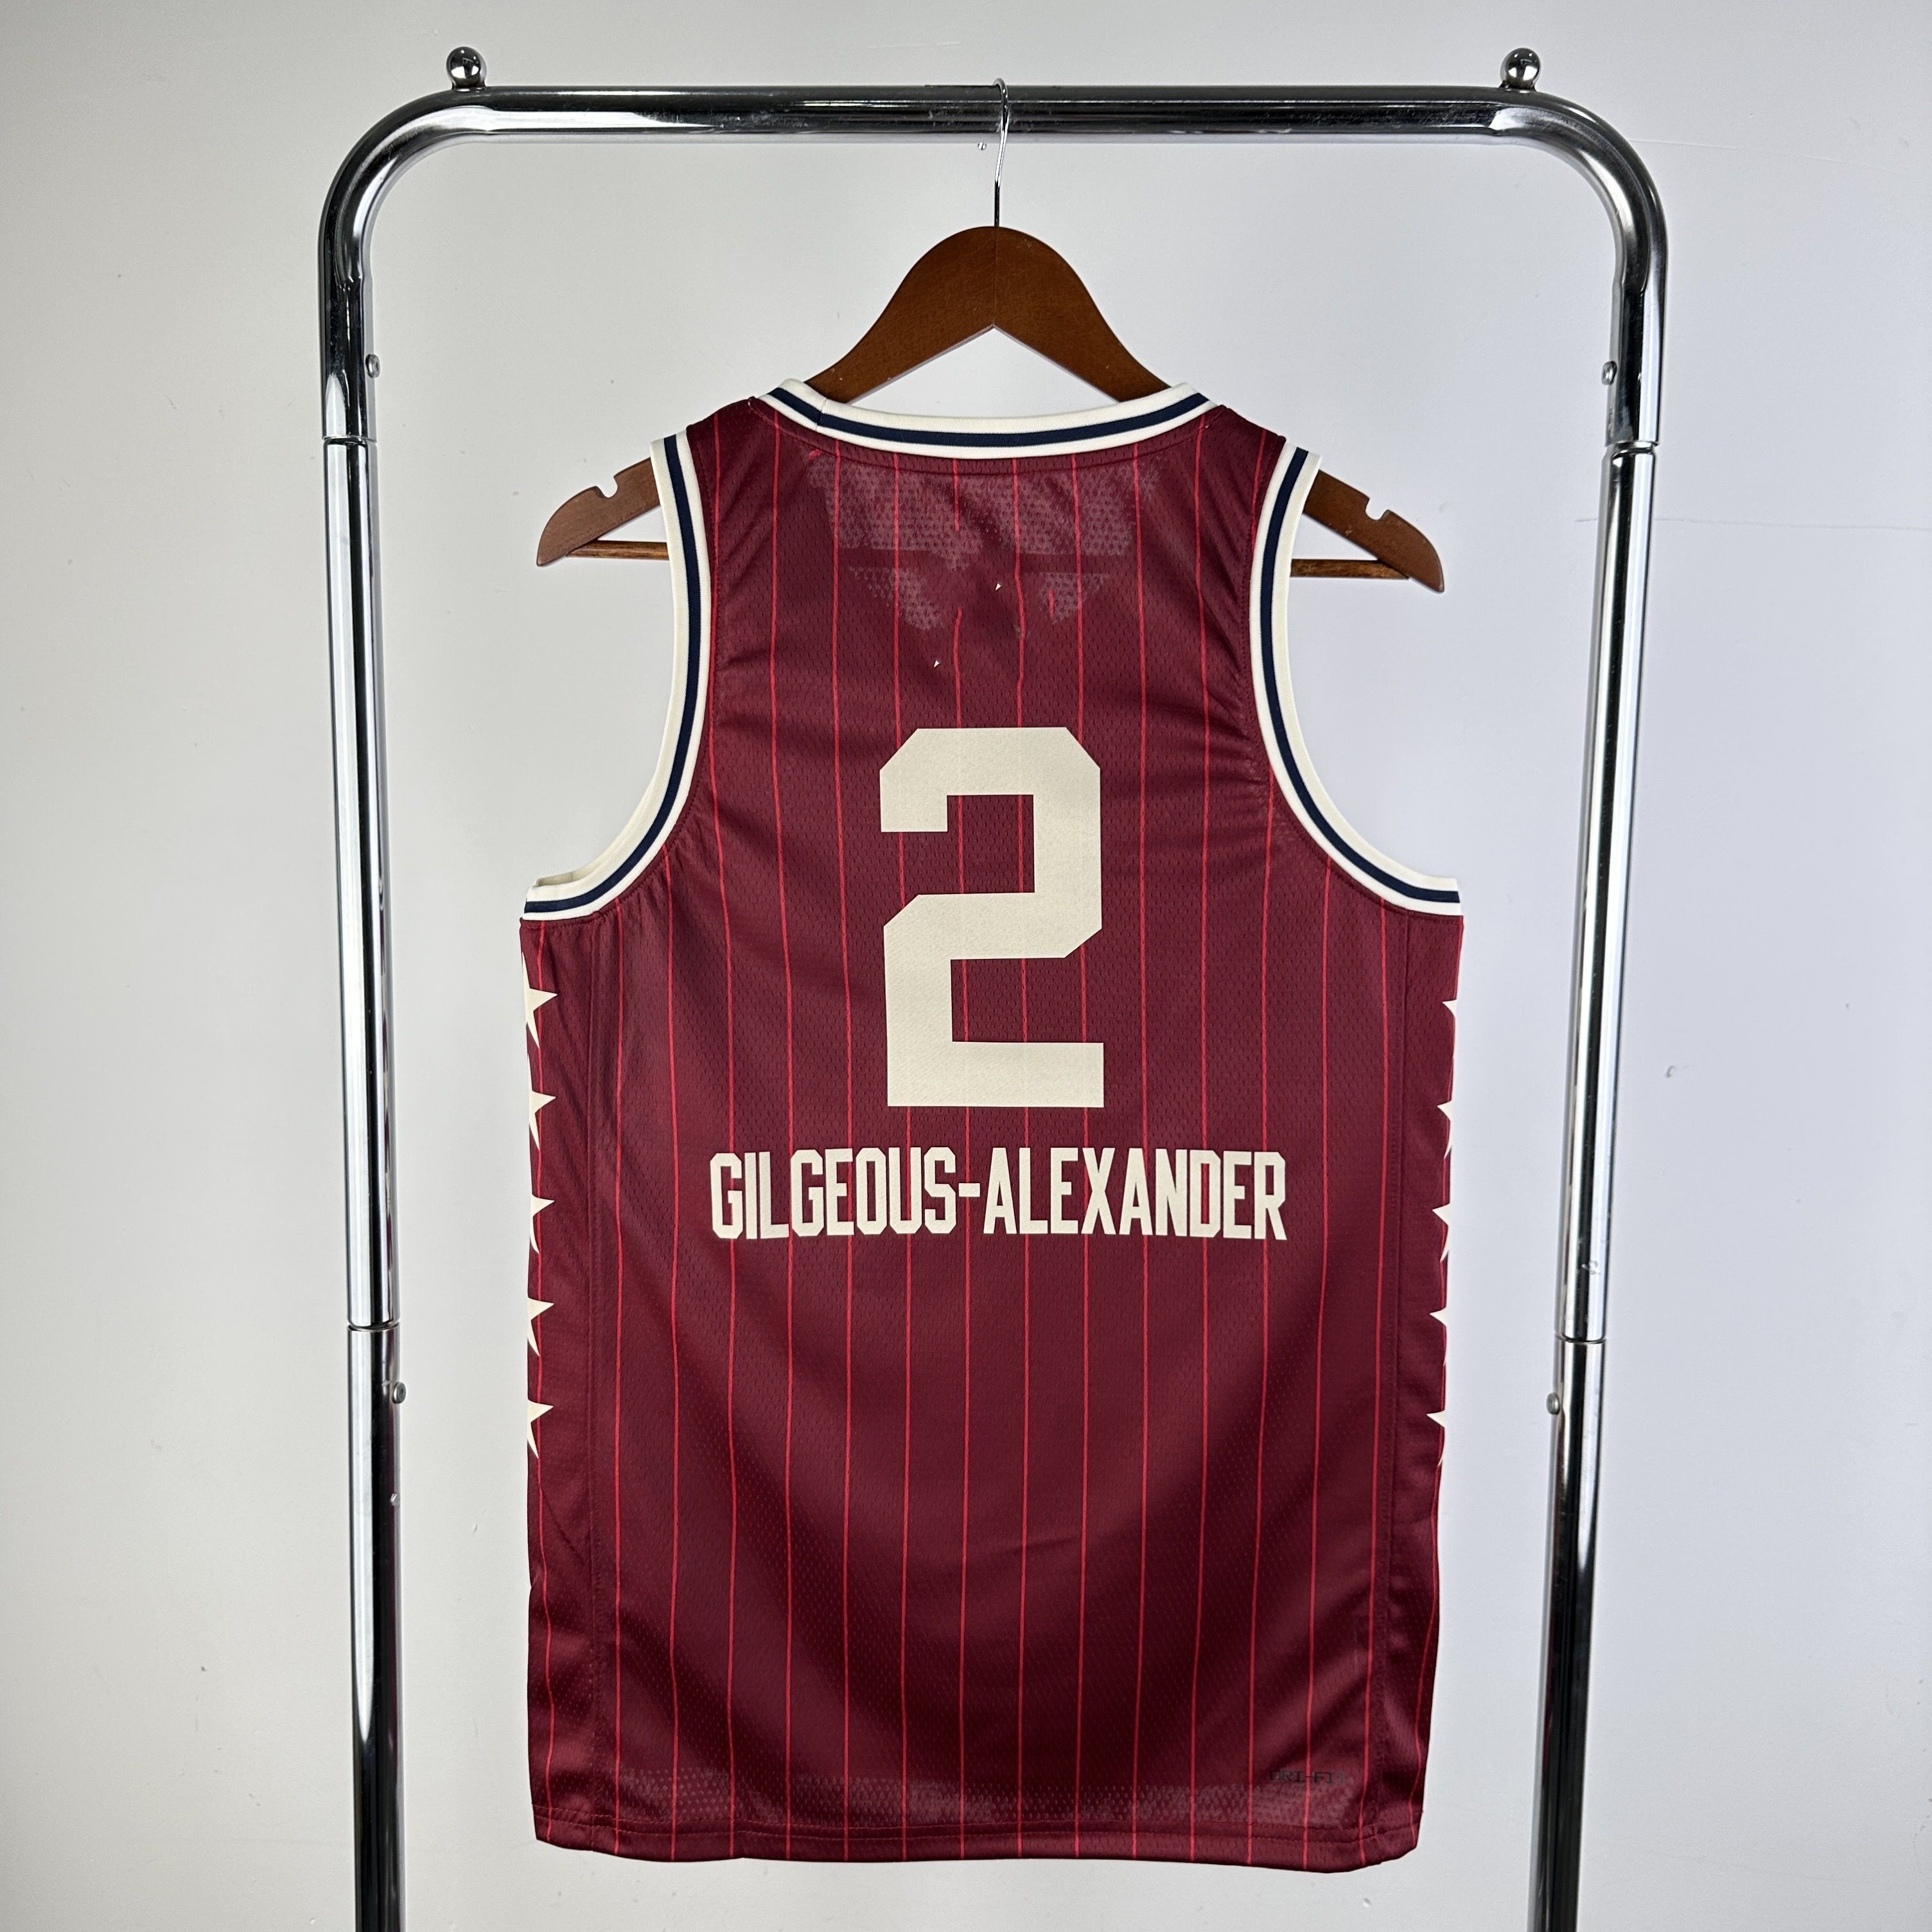 #2 Gilgeous-Alexender